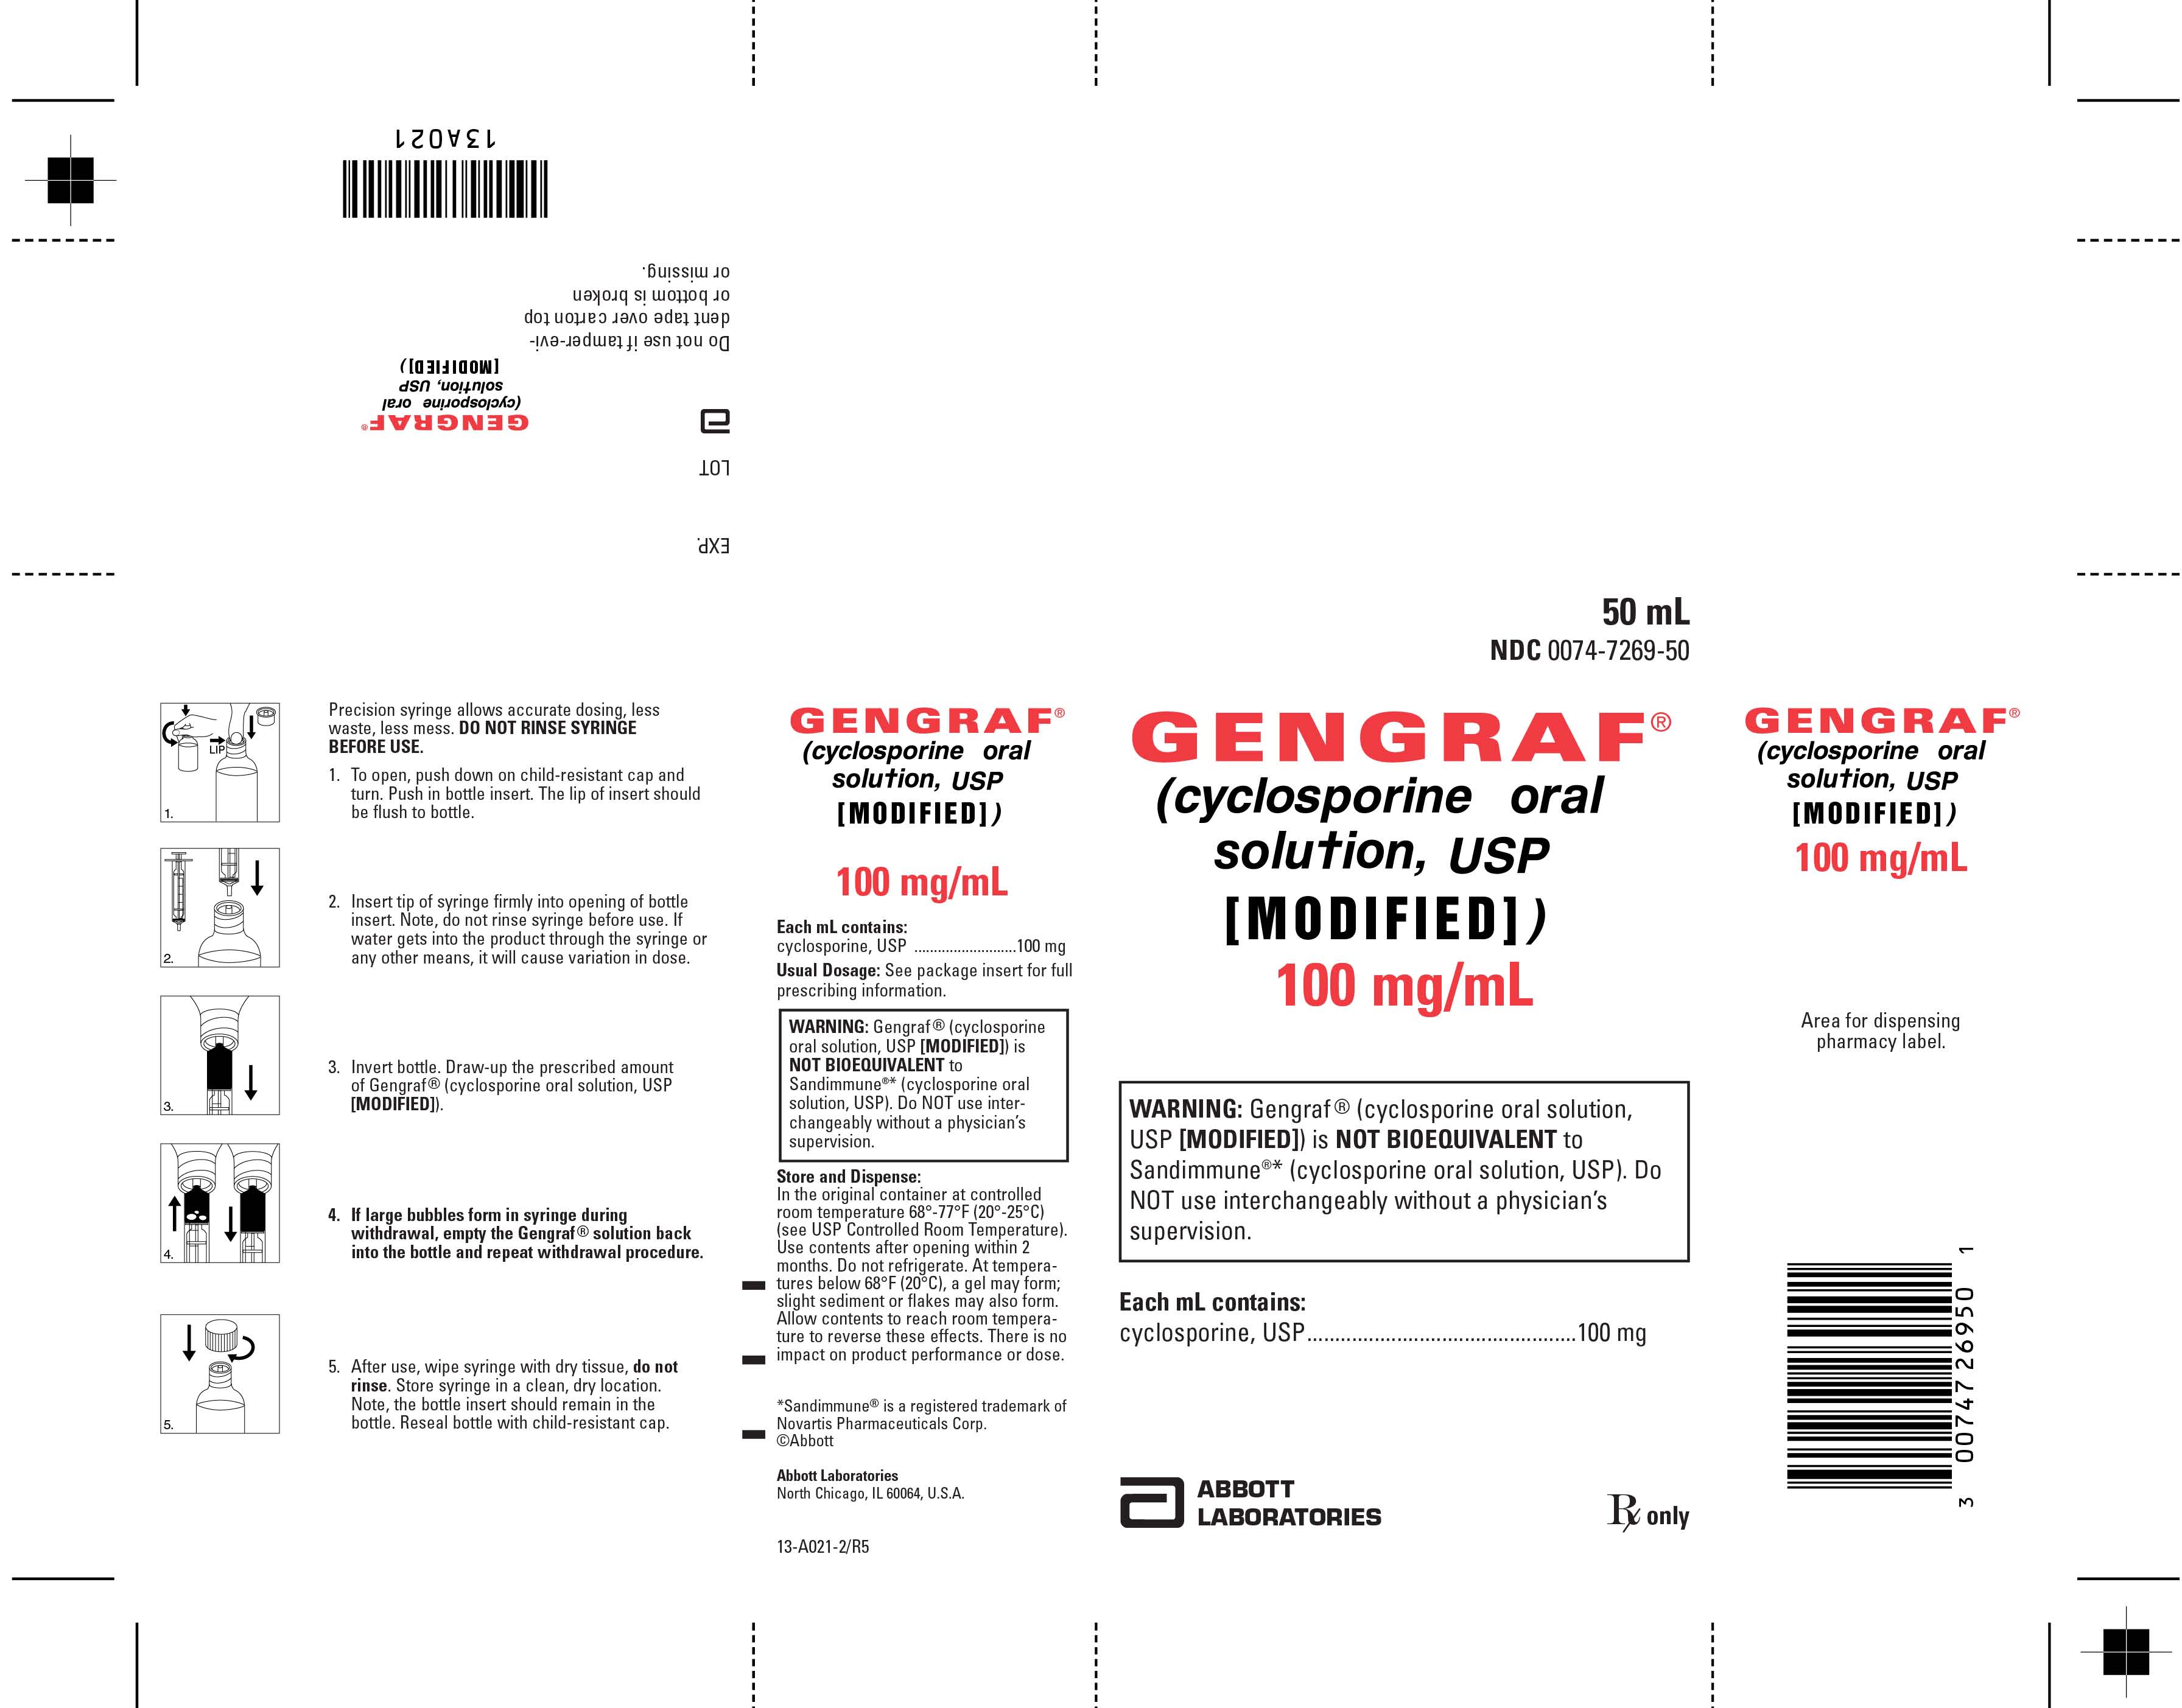 Carton Label: 50 mL Gengraph® Oral Solution, USP 100mg/mL